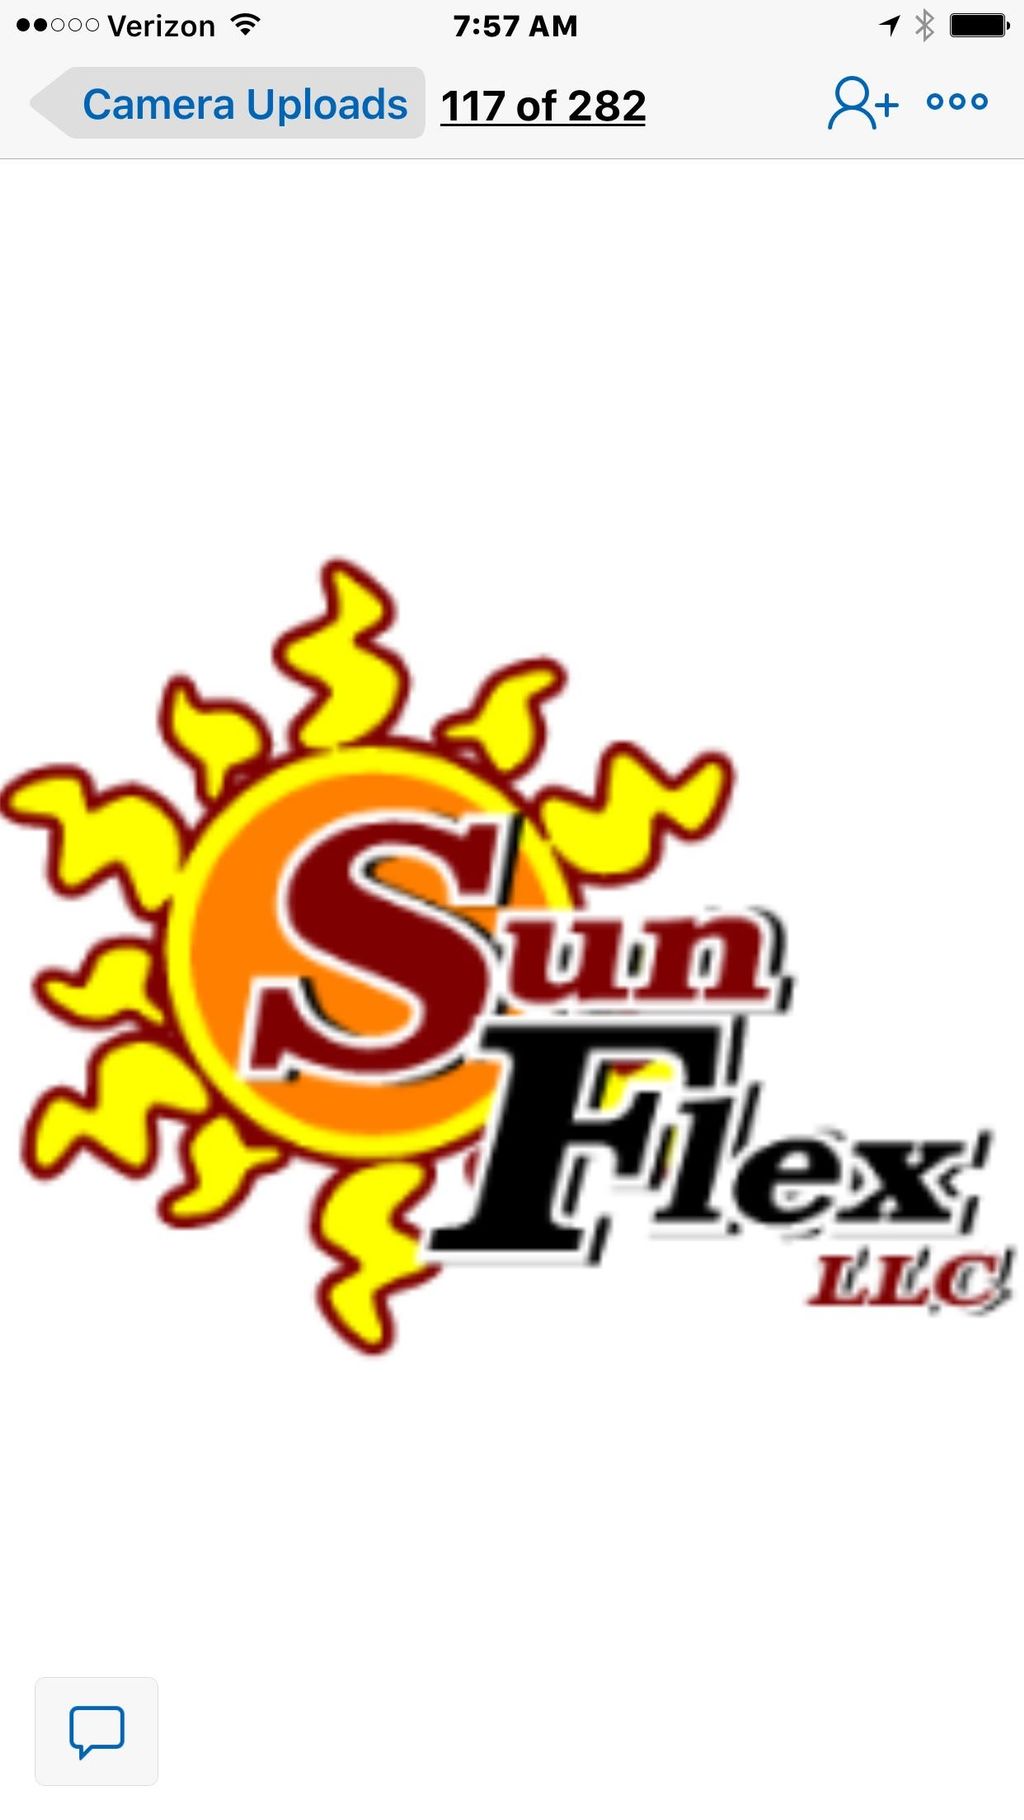 Sun flex home improvements llc